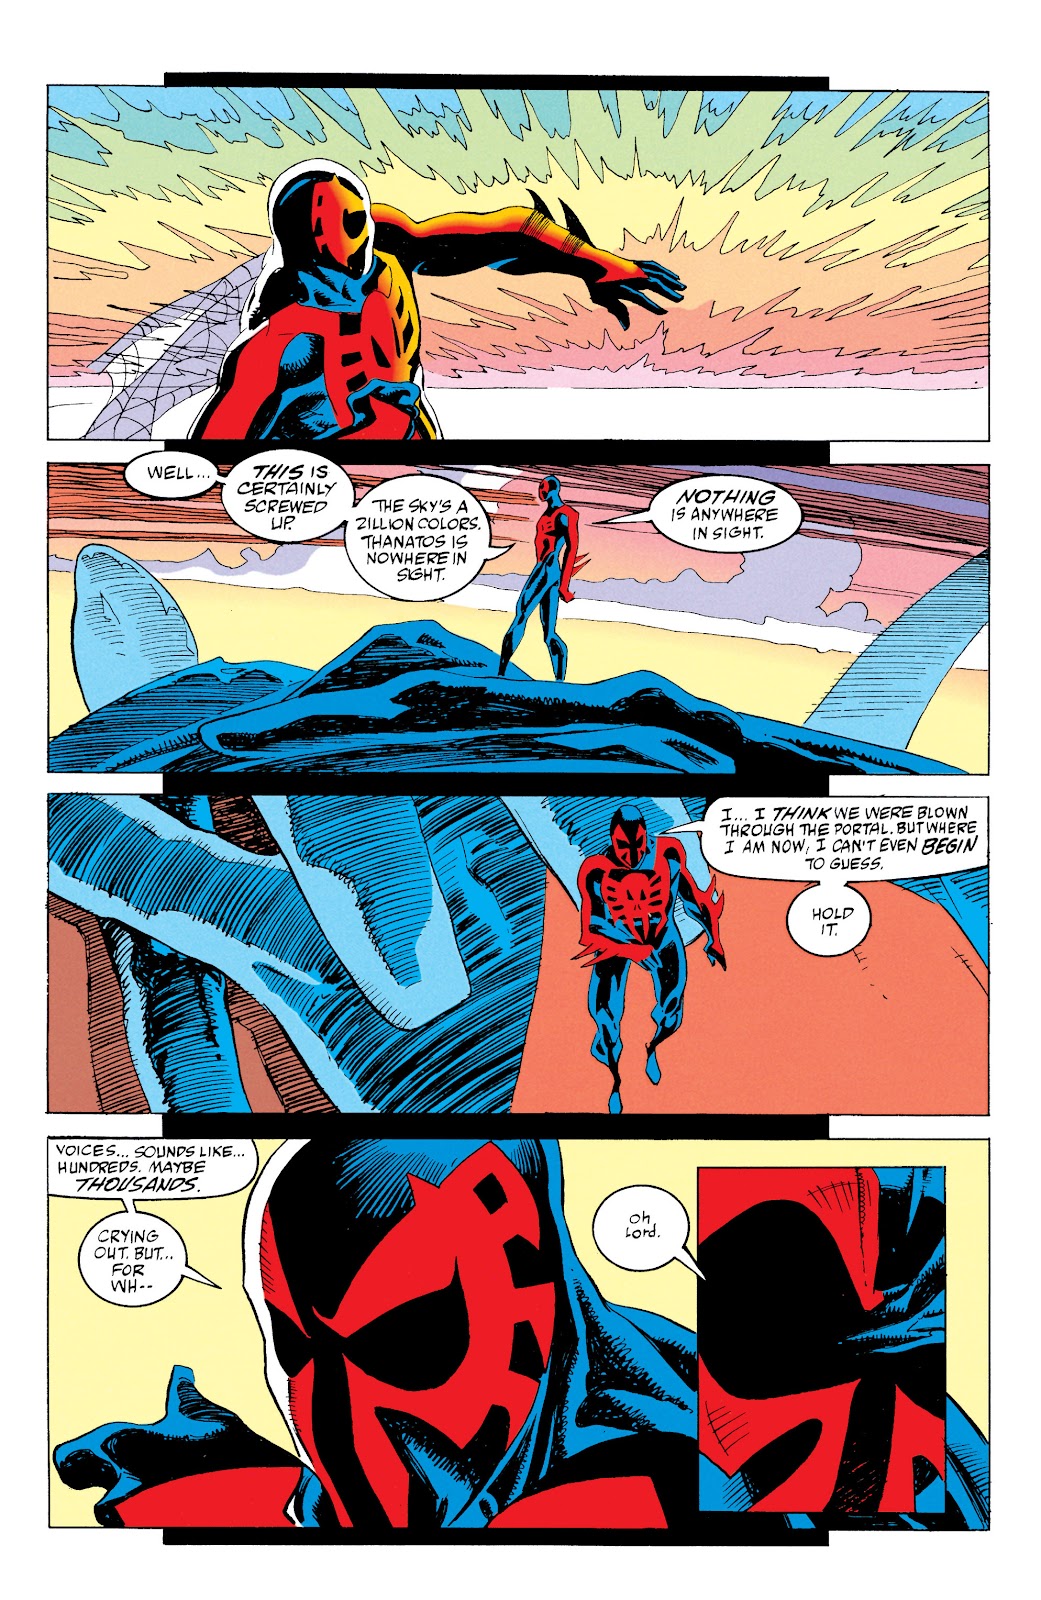 Spider-Man 2099 (1992) issue 13 - Page 11